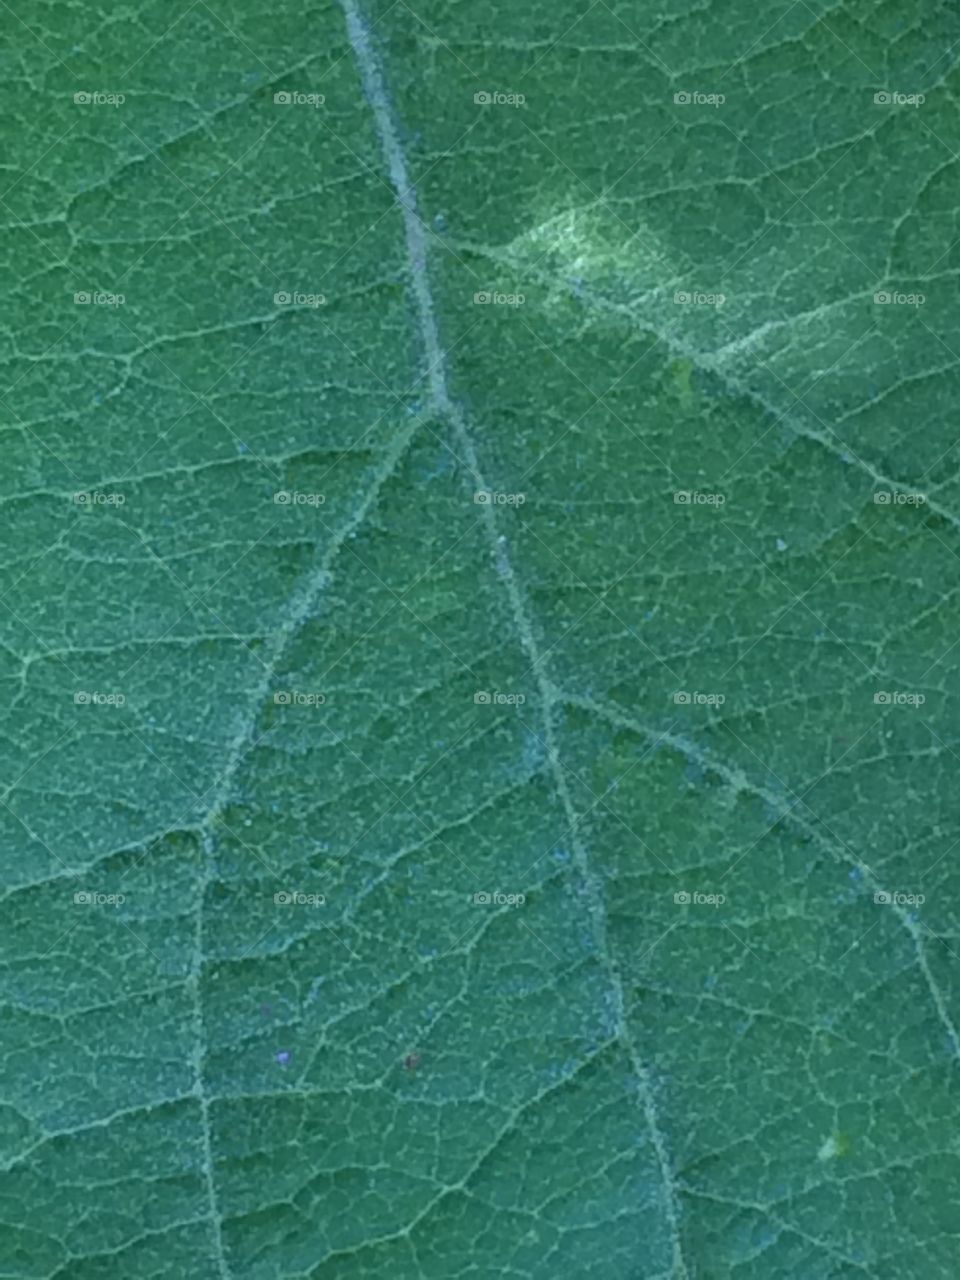 Leaf closeup 